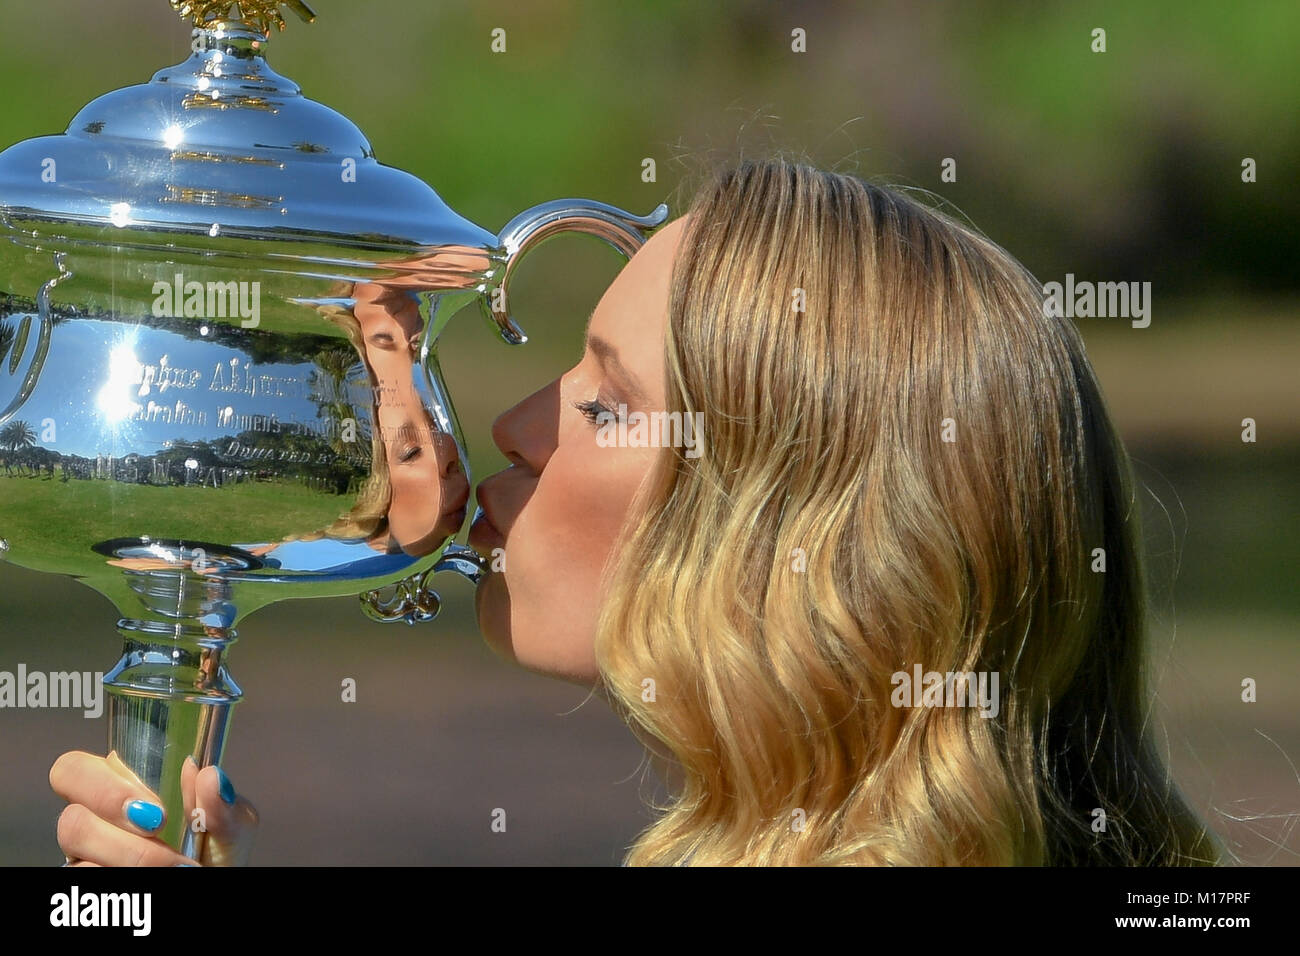 Melbourne, Australia. 28th Jan, 2018. The 2018 Australian Open Women's Champion Caroline Wozniacki of Denmark kisses her trophy at the Botanical Gardens in Melbourne, Australia. Sydney Low/Cal Sport Media/Alamy Live News Stock Photo